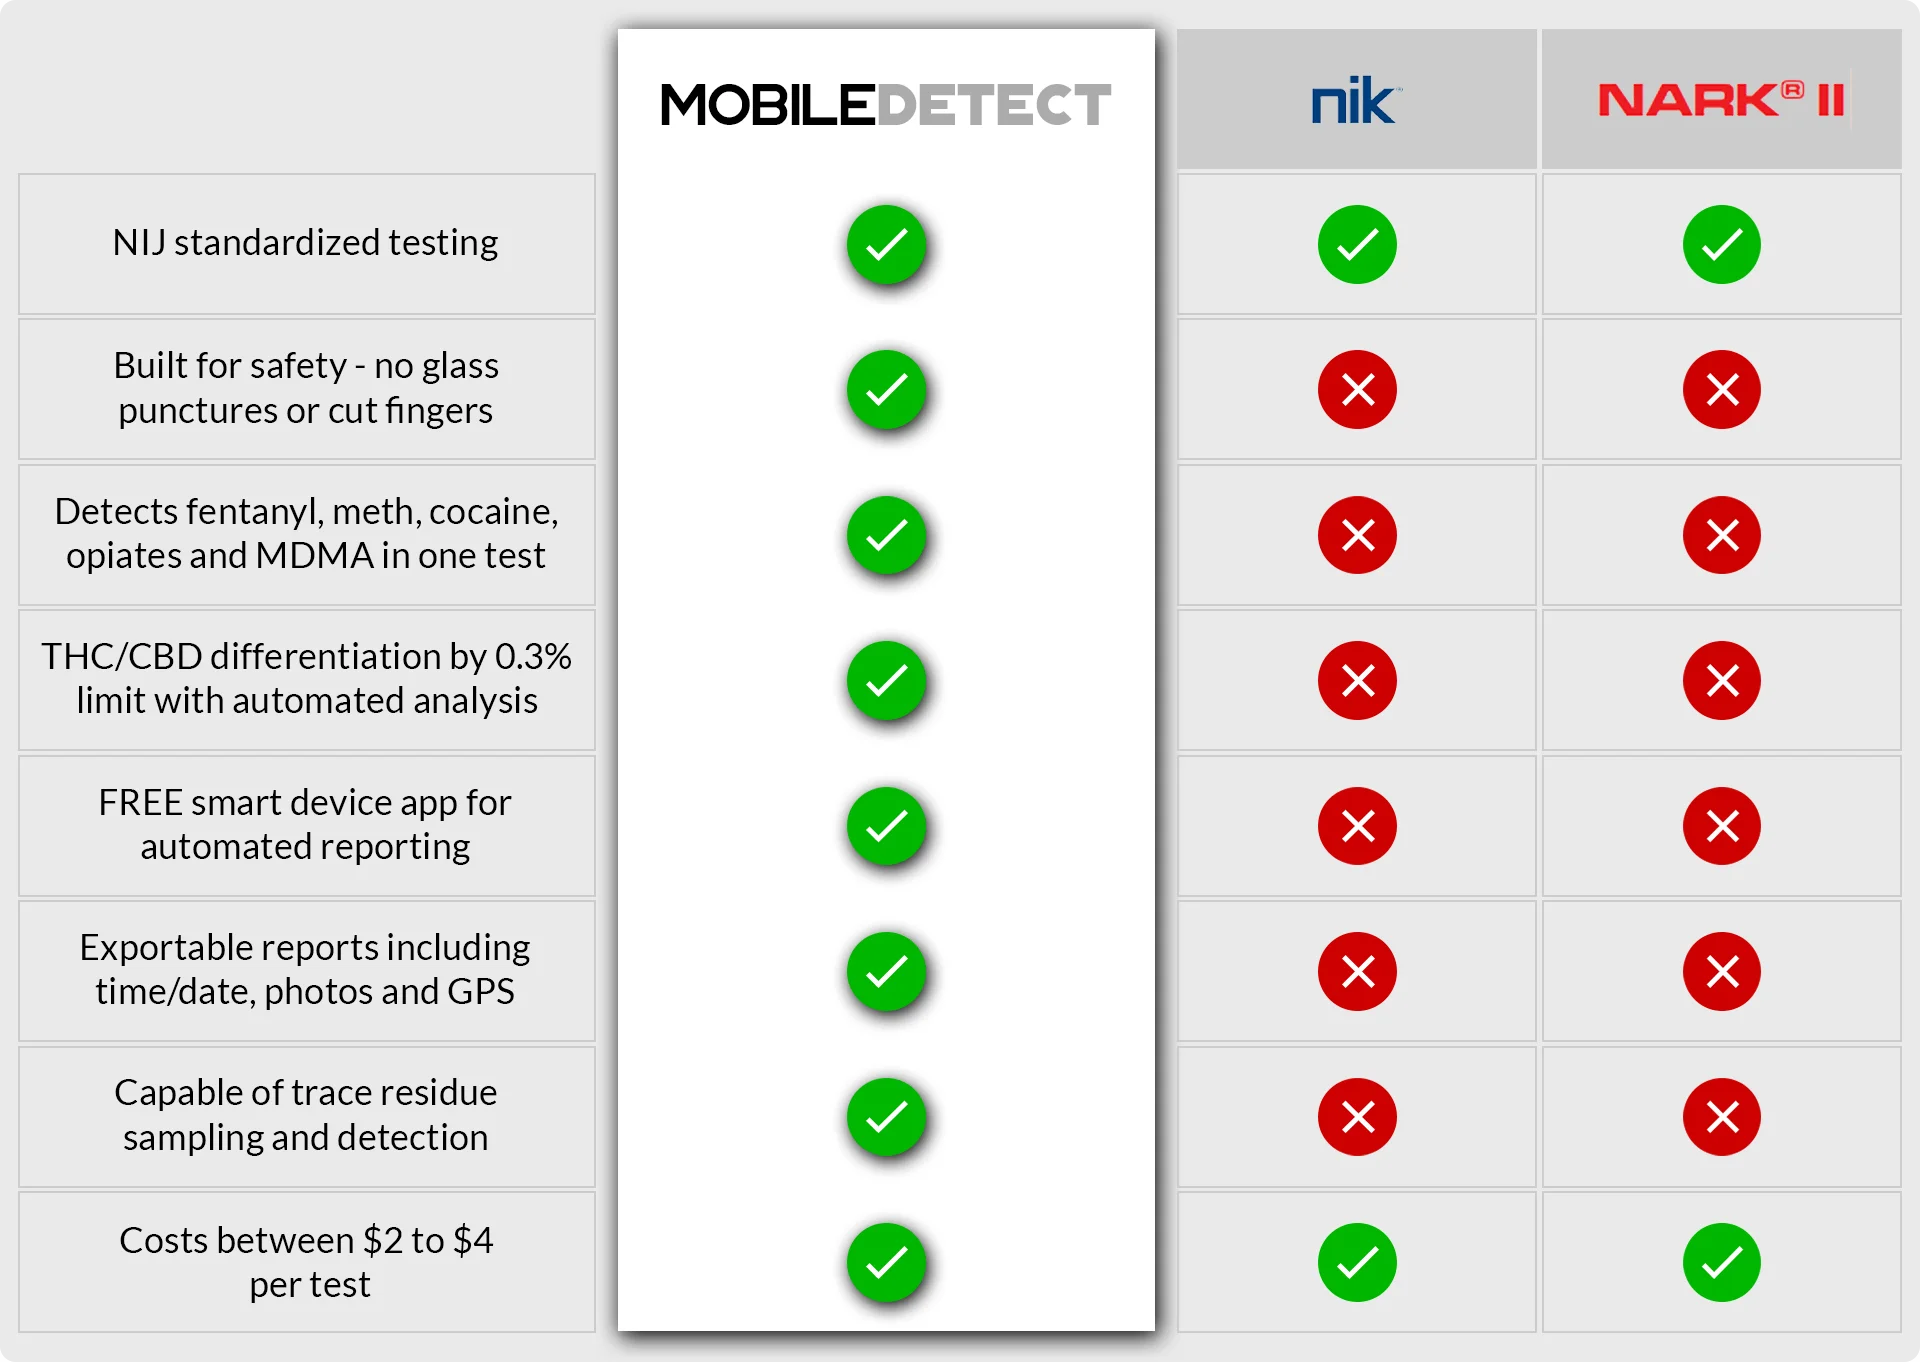 MobileDetect VS NIK and NARK